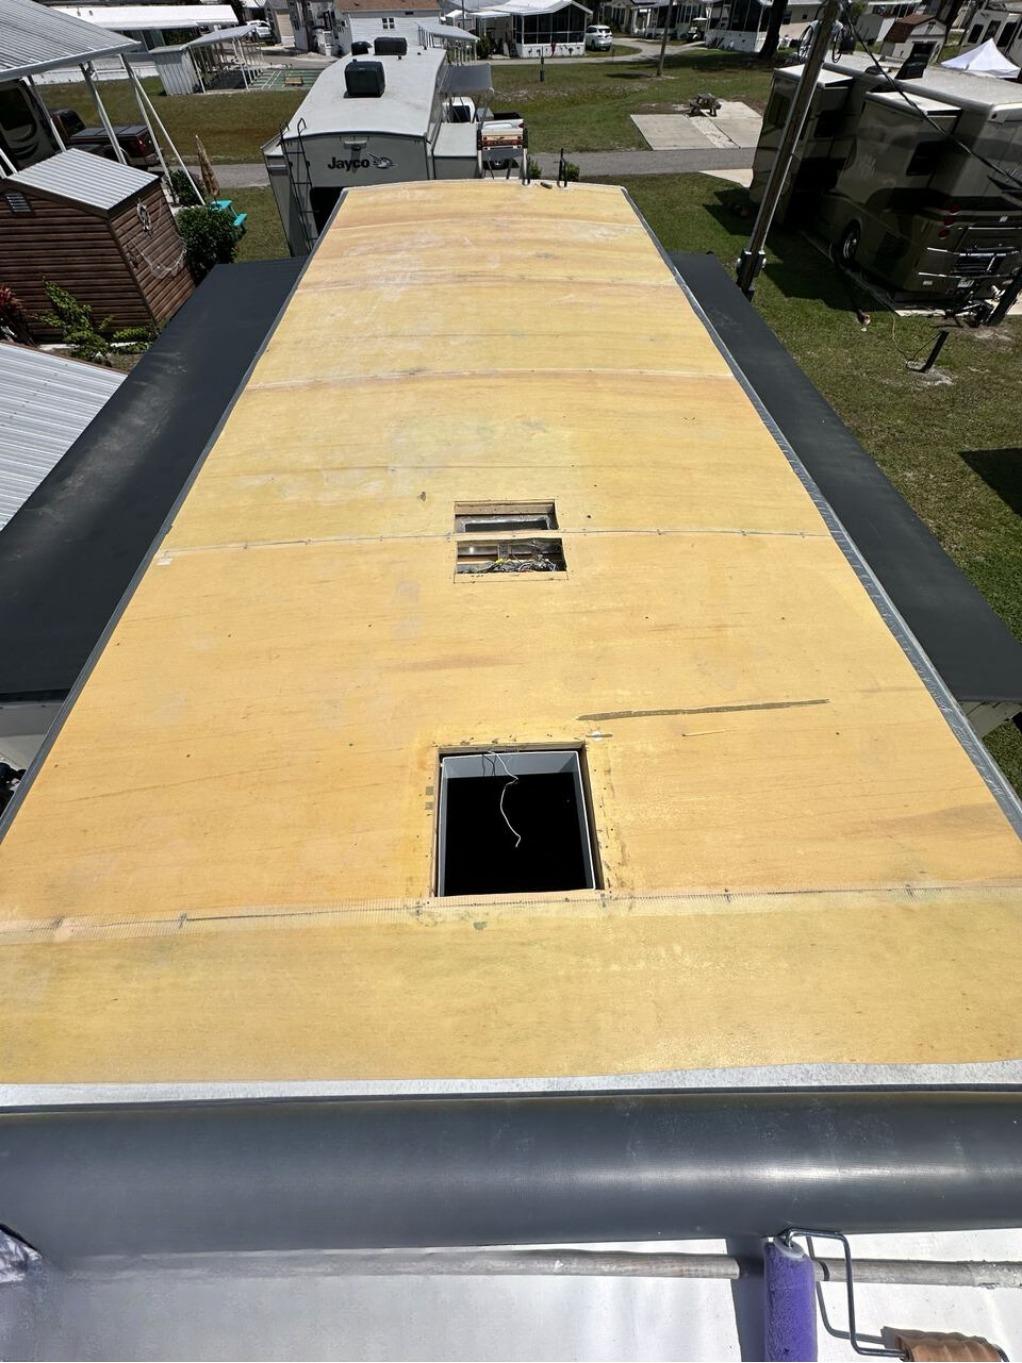 rv roof coating